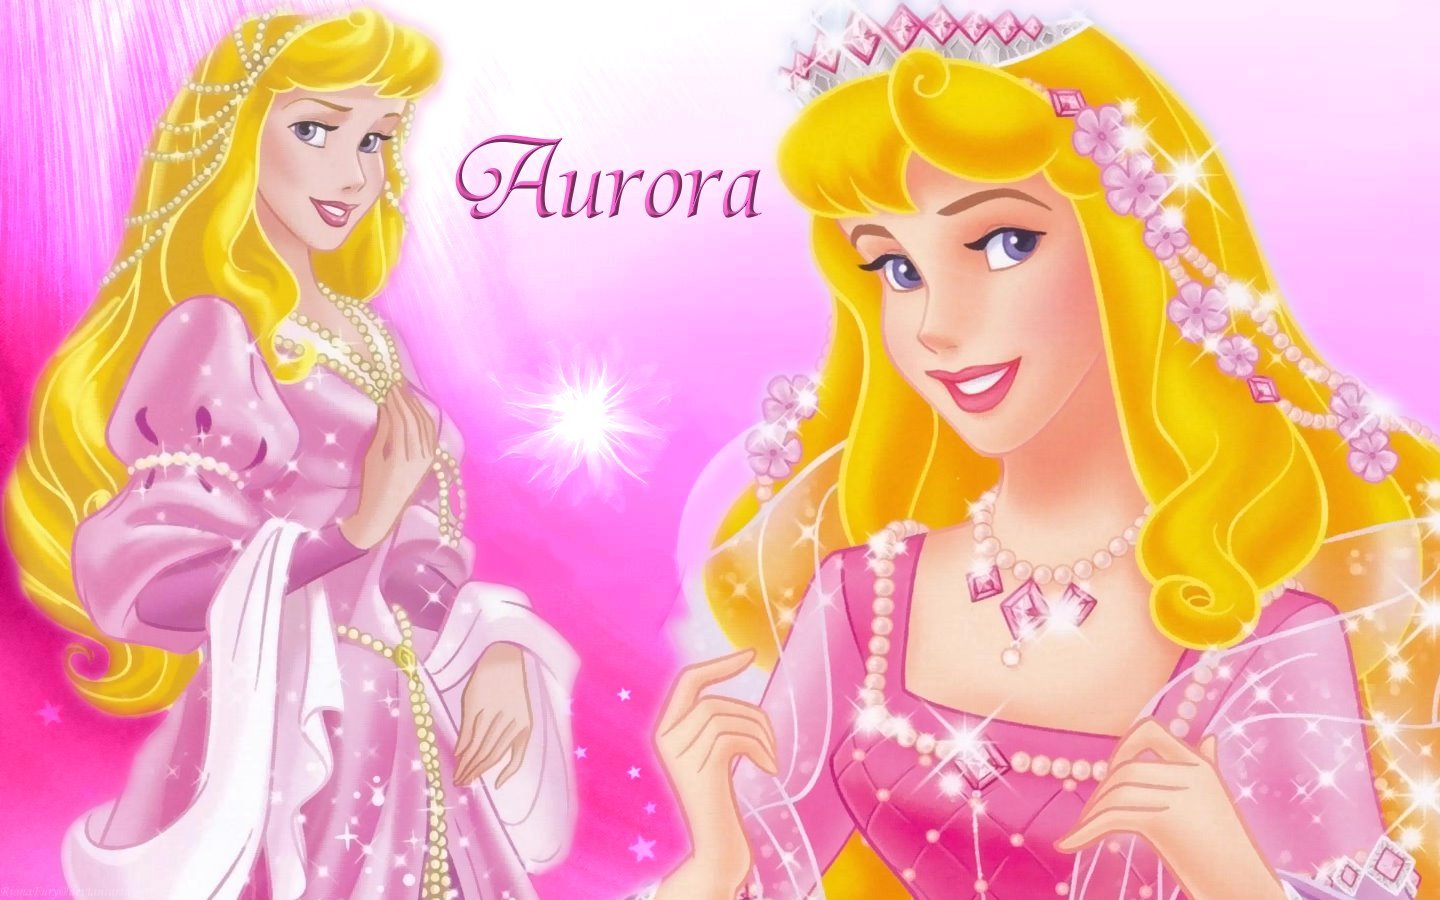 Sleeping Beauty Image Princess Aurora HD Wallpaper And